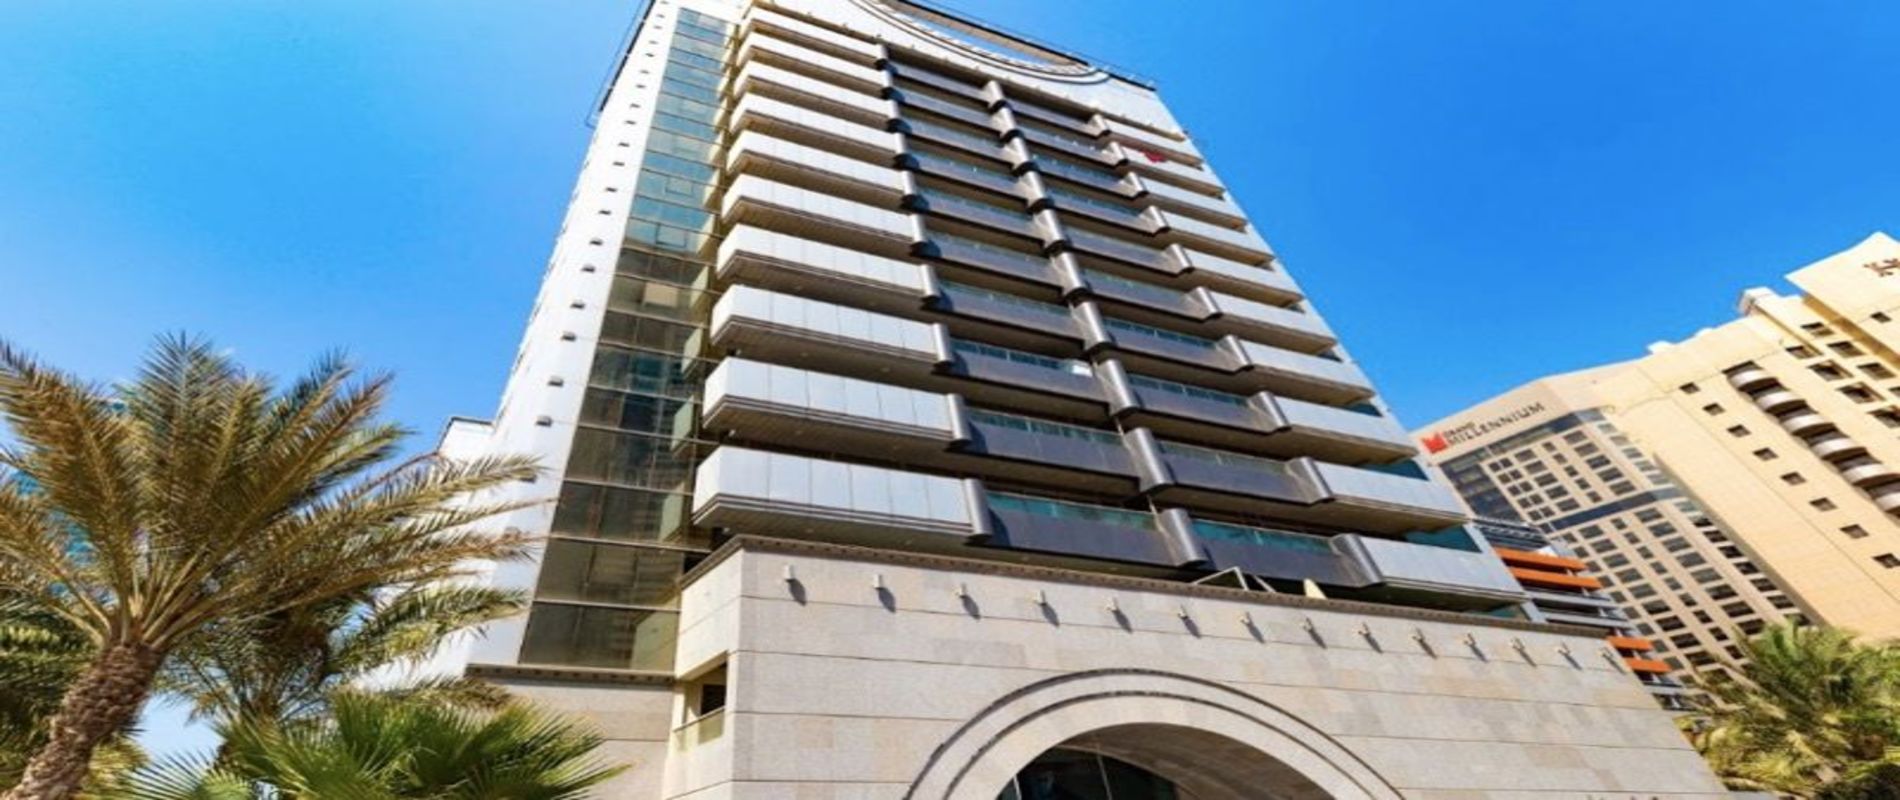 Elegance House Apartments - Barsha Heights Dubai.